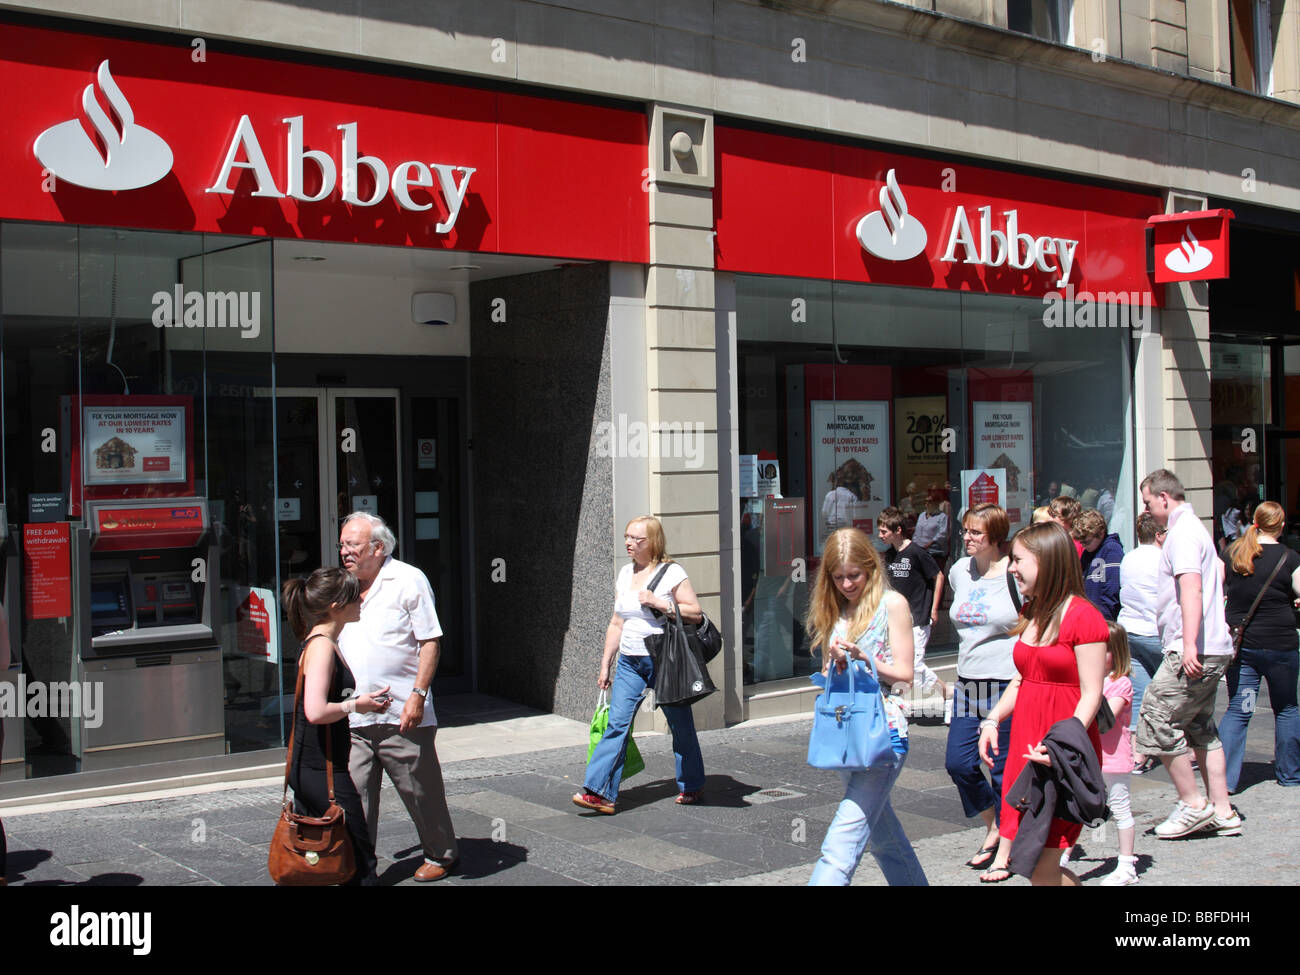 Abbey Bank in a U.K. city. Stock Photo